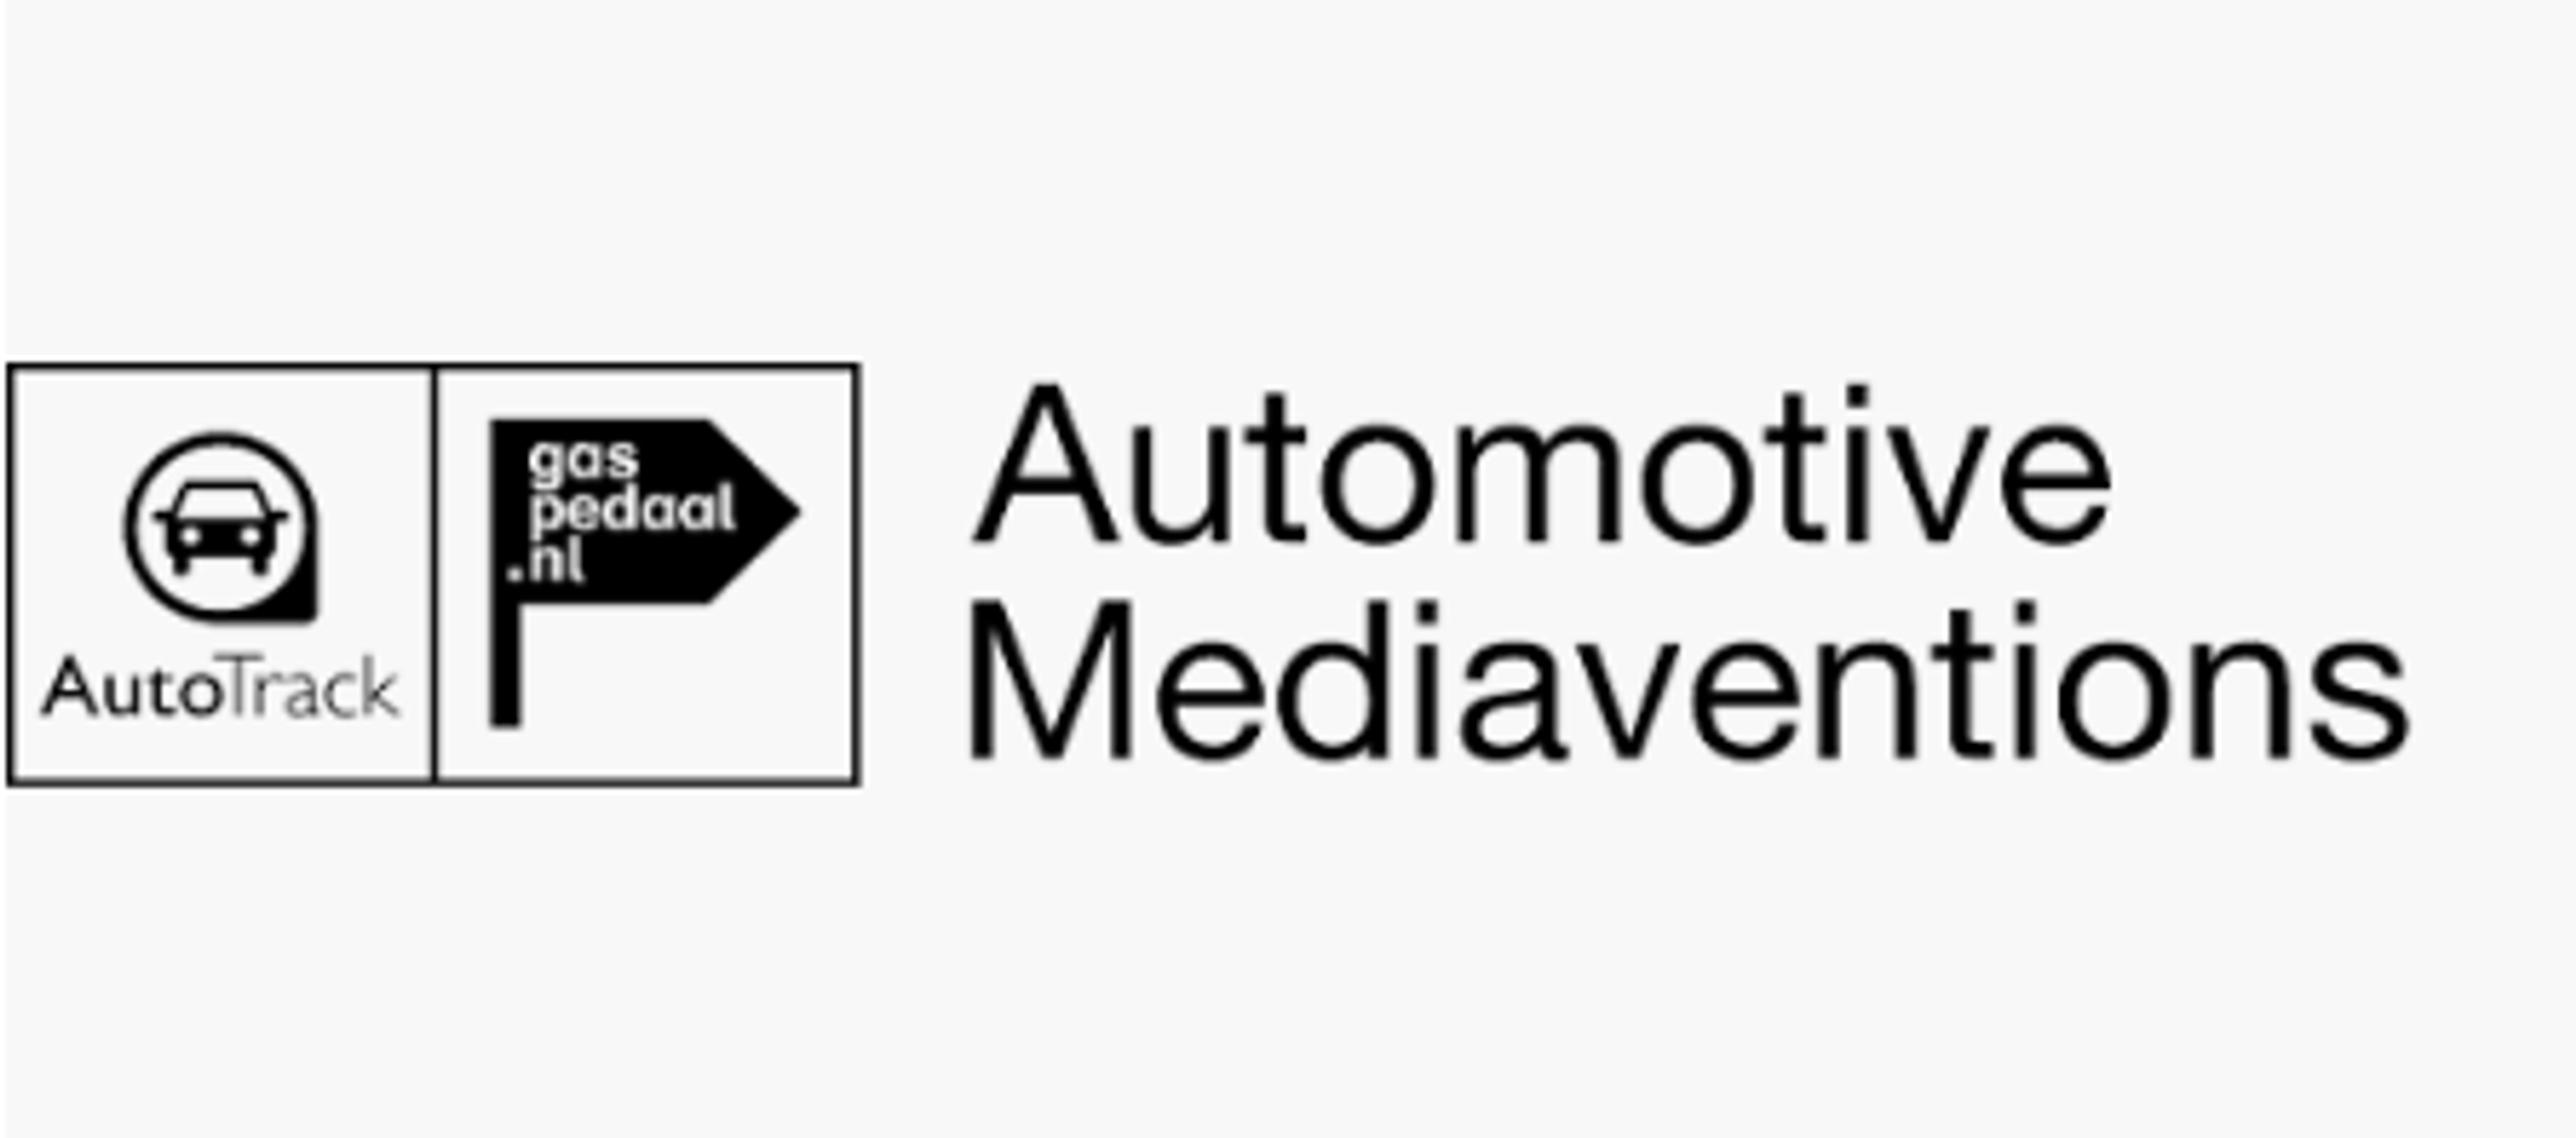 Gaspedaal.nl en AutoTrack.nl nu onder Automotive Mediaventions B.V.